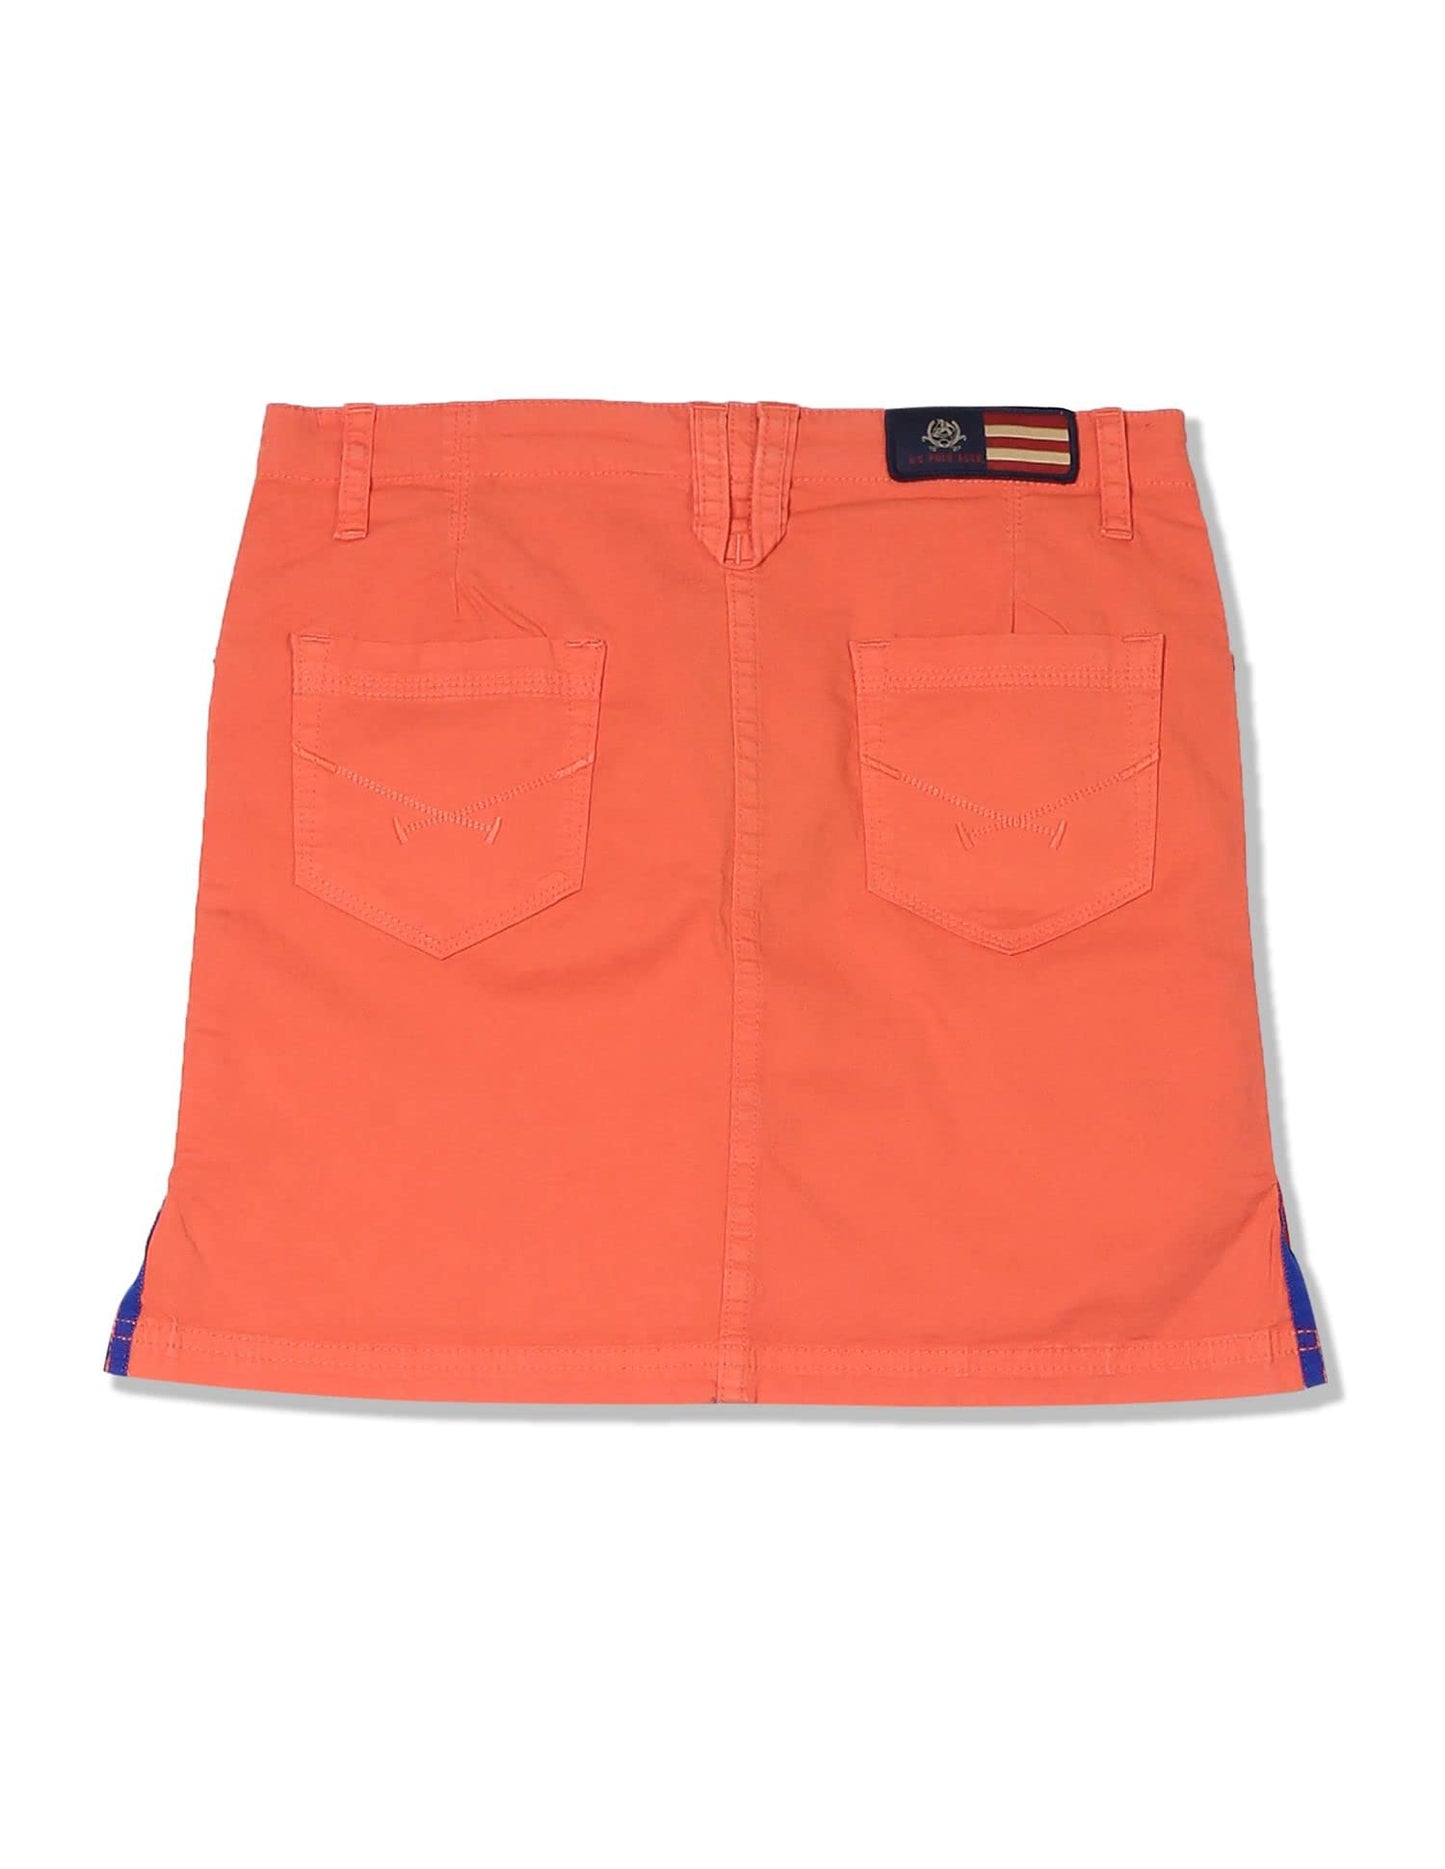 US Polo Association Cotton Blend Skirt Orange